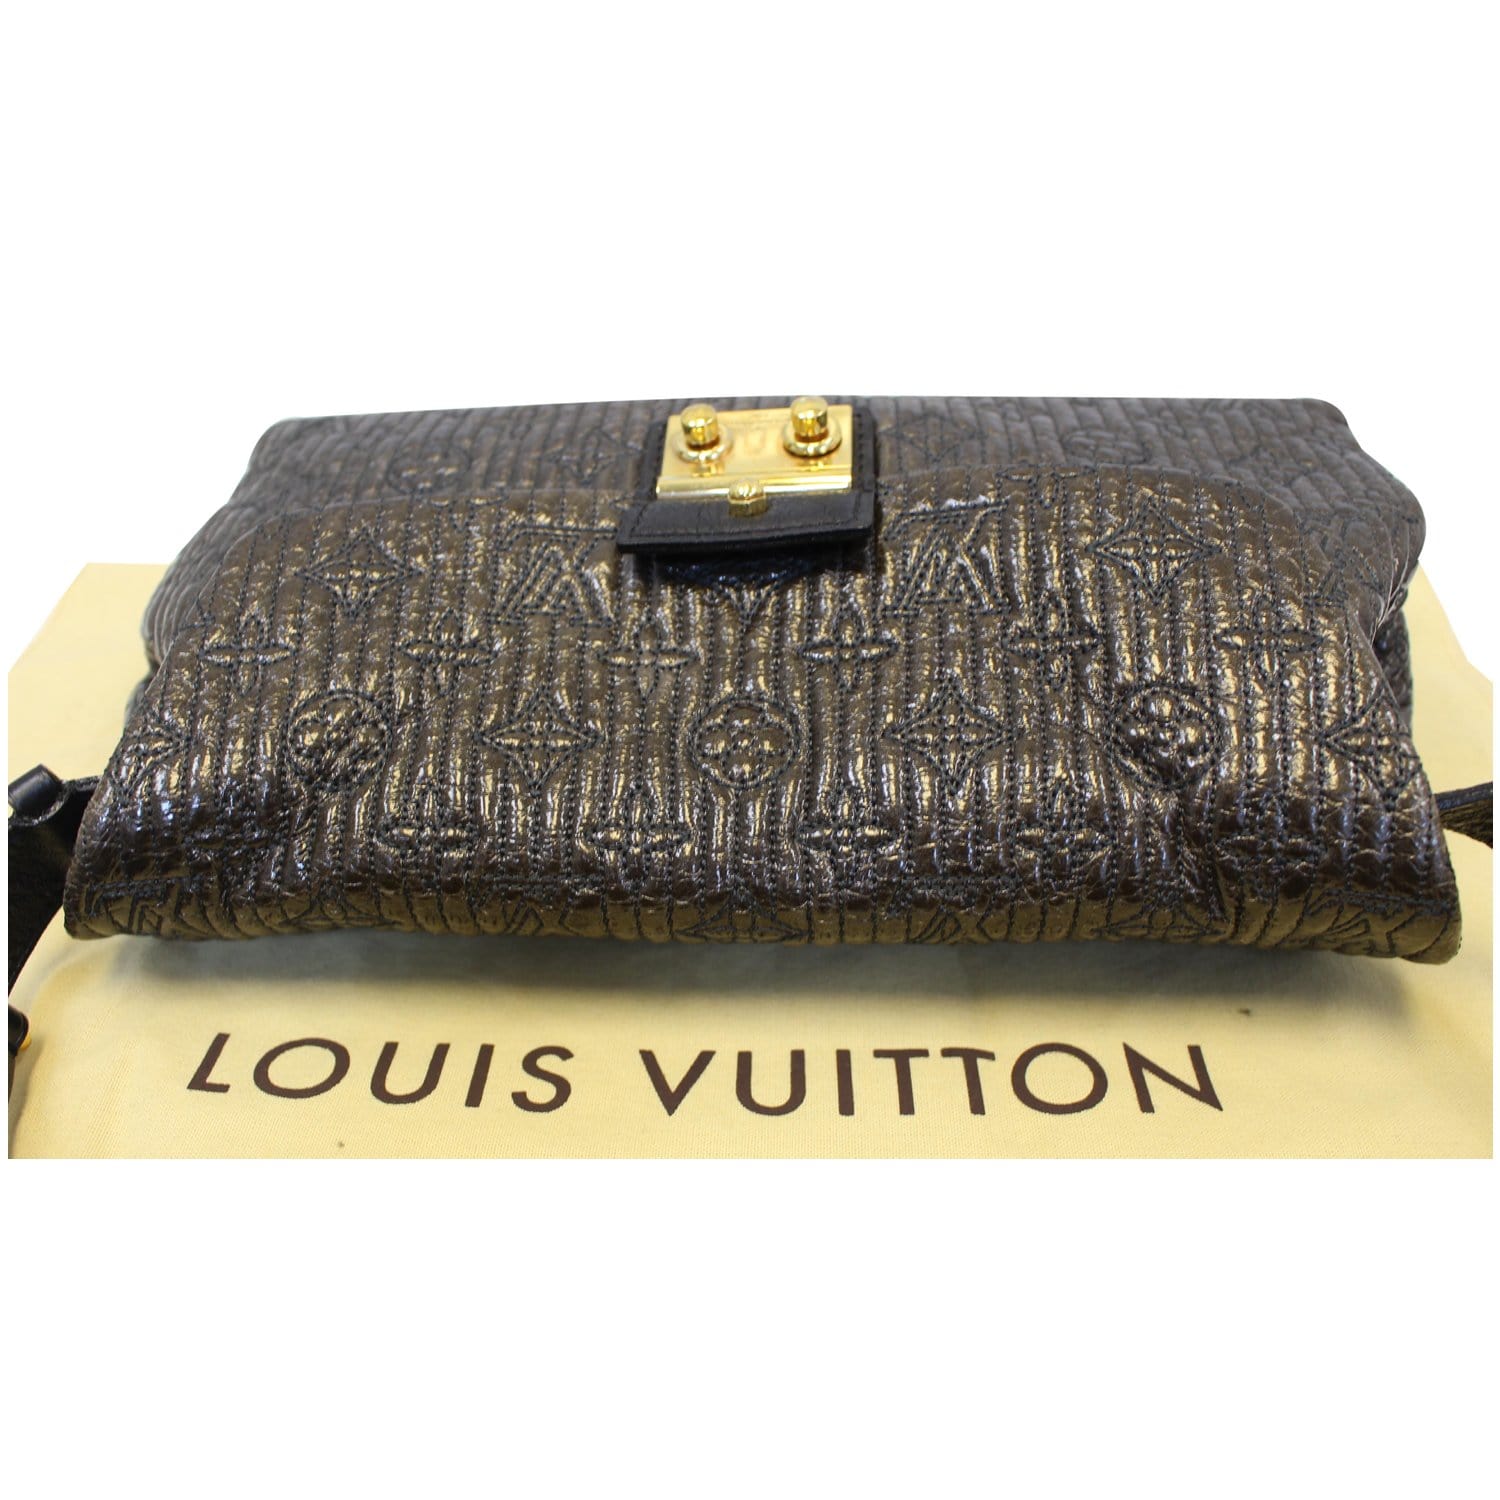 Authentic Louis Vuitton Altair Clutch Box Dustbag